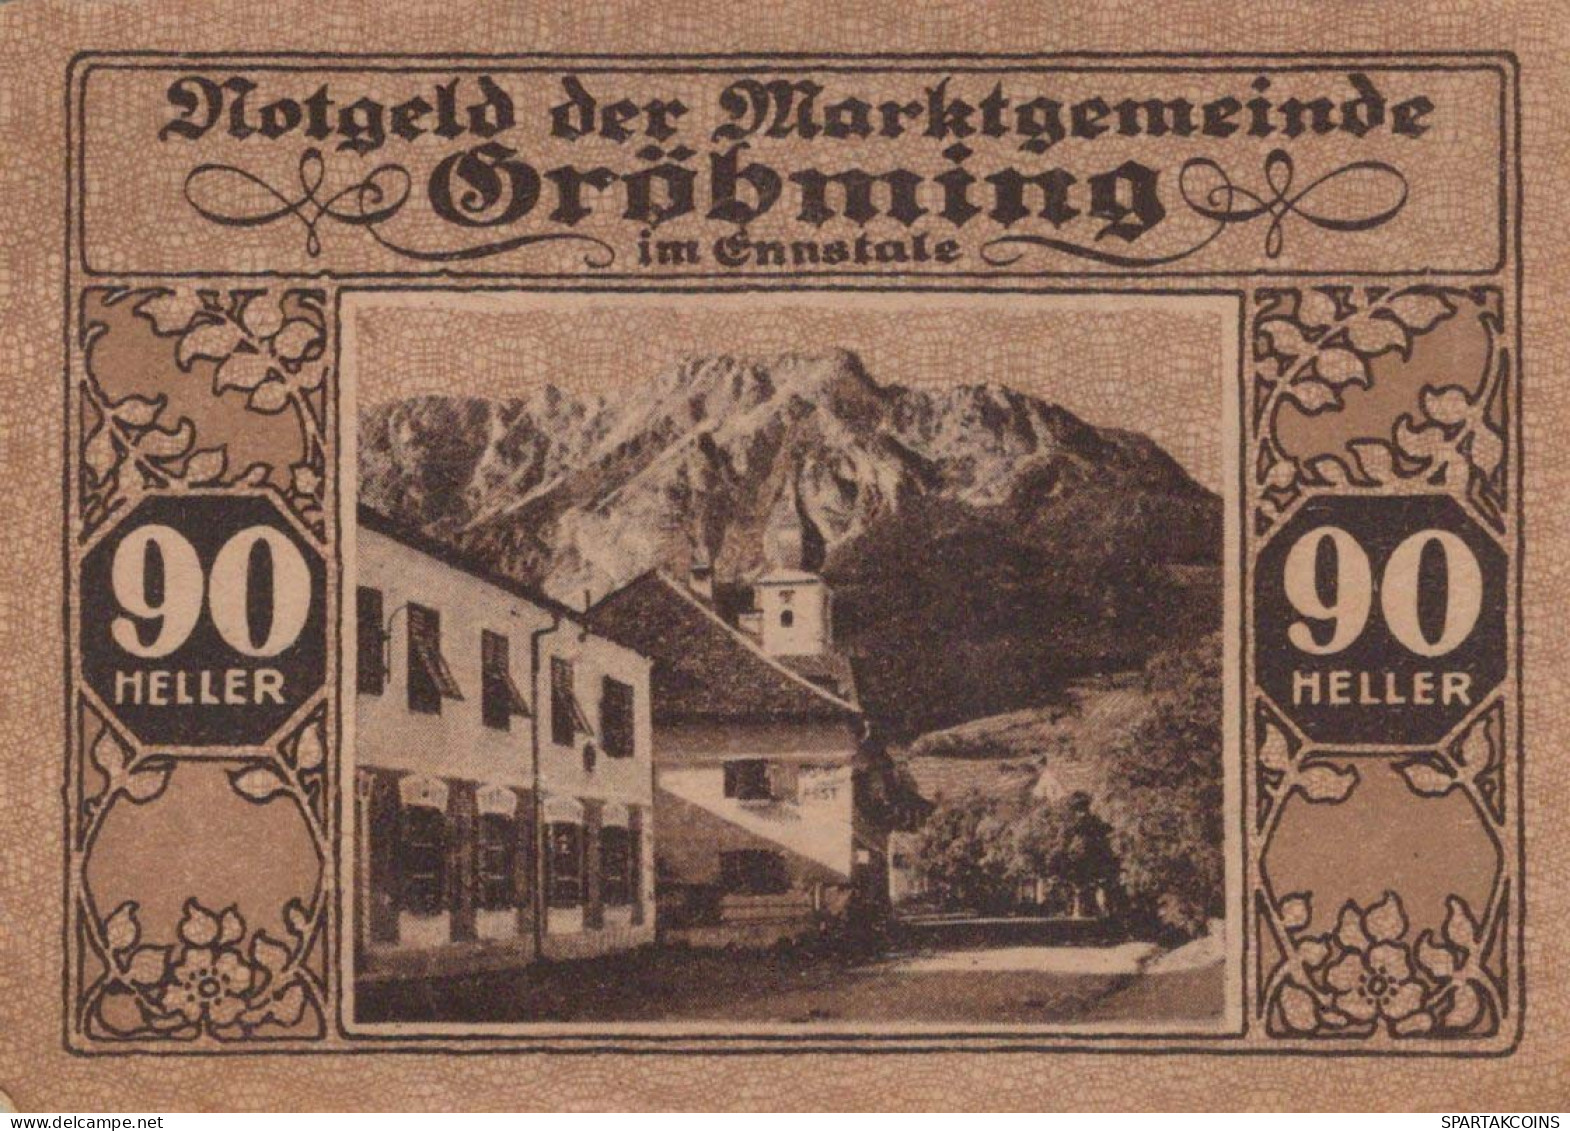 90 HELLER 1920 Stadt GRoBMING Styria Österreich Notgeld Banknote #PE915 - [11] Local Banknote Issues